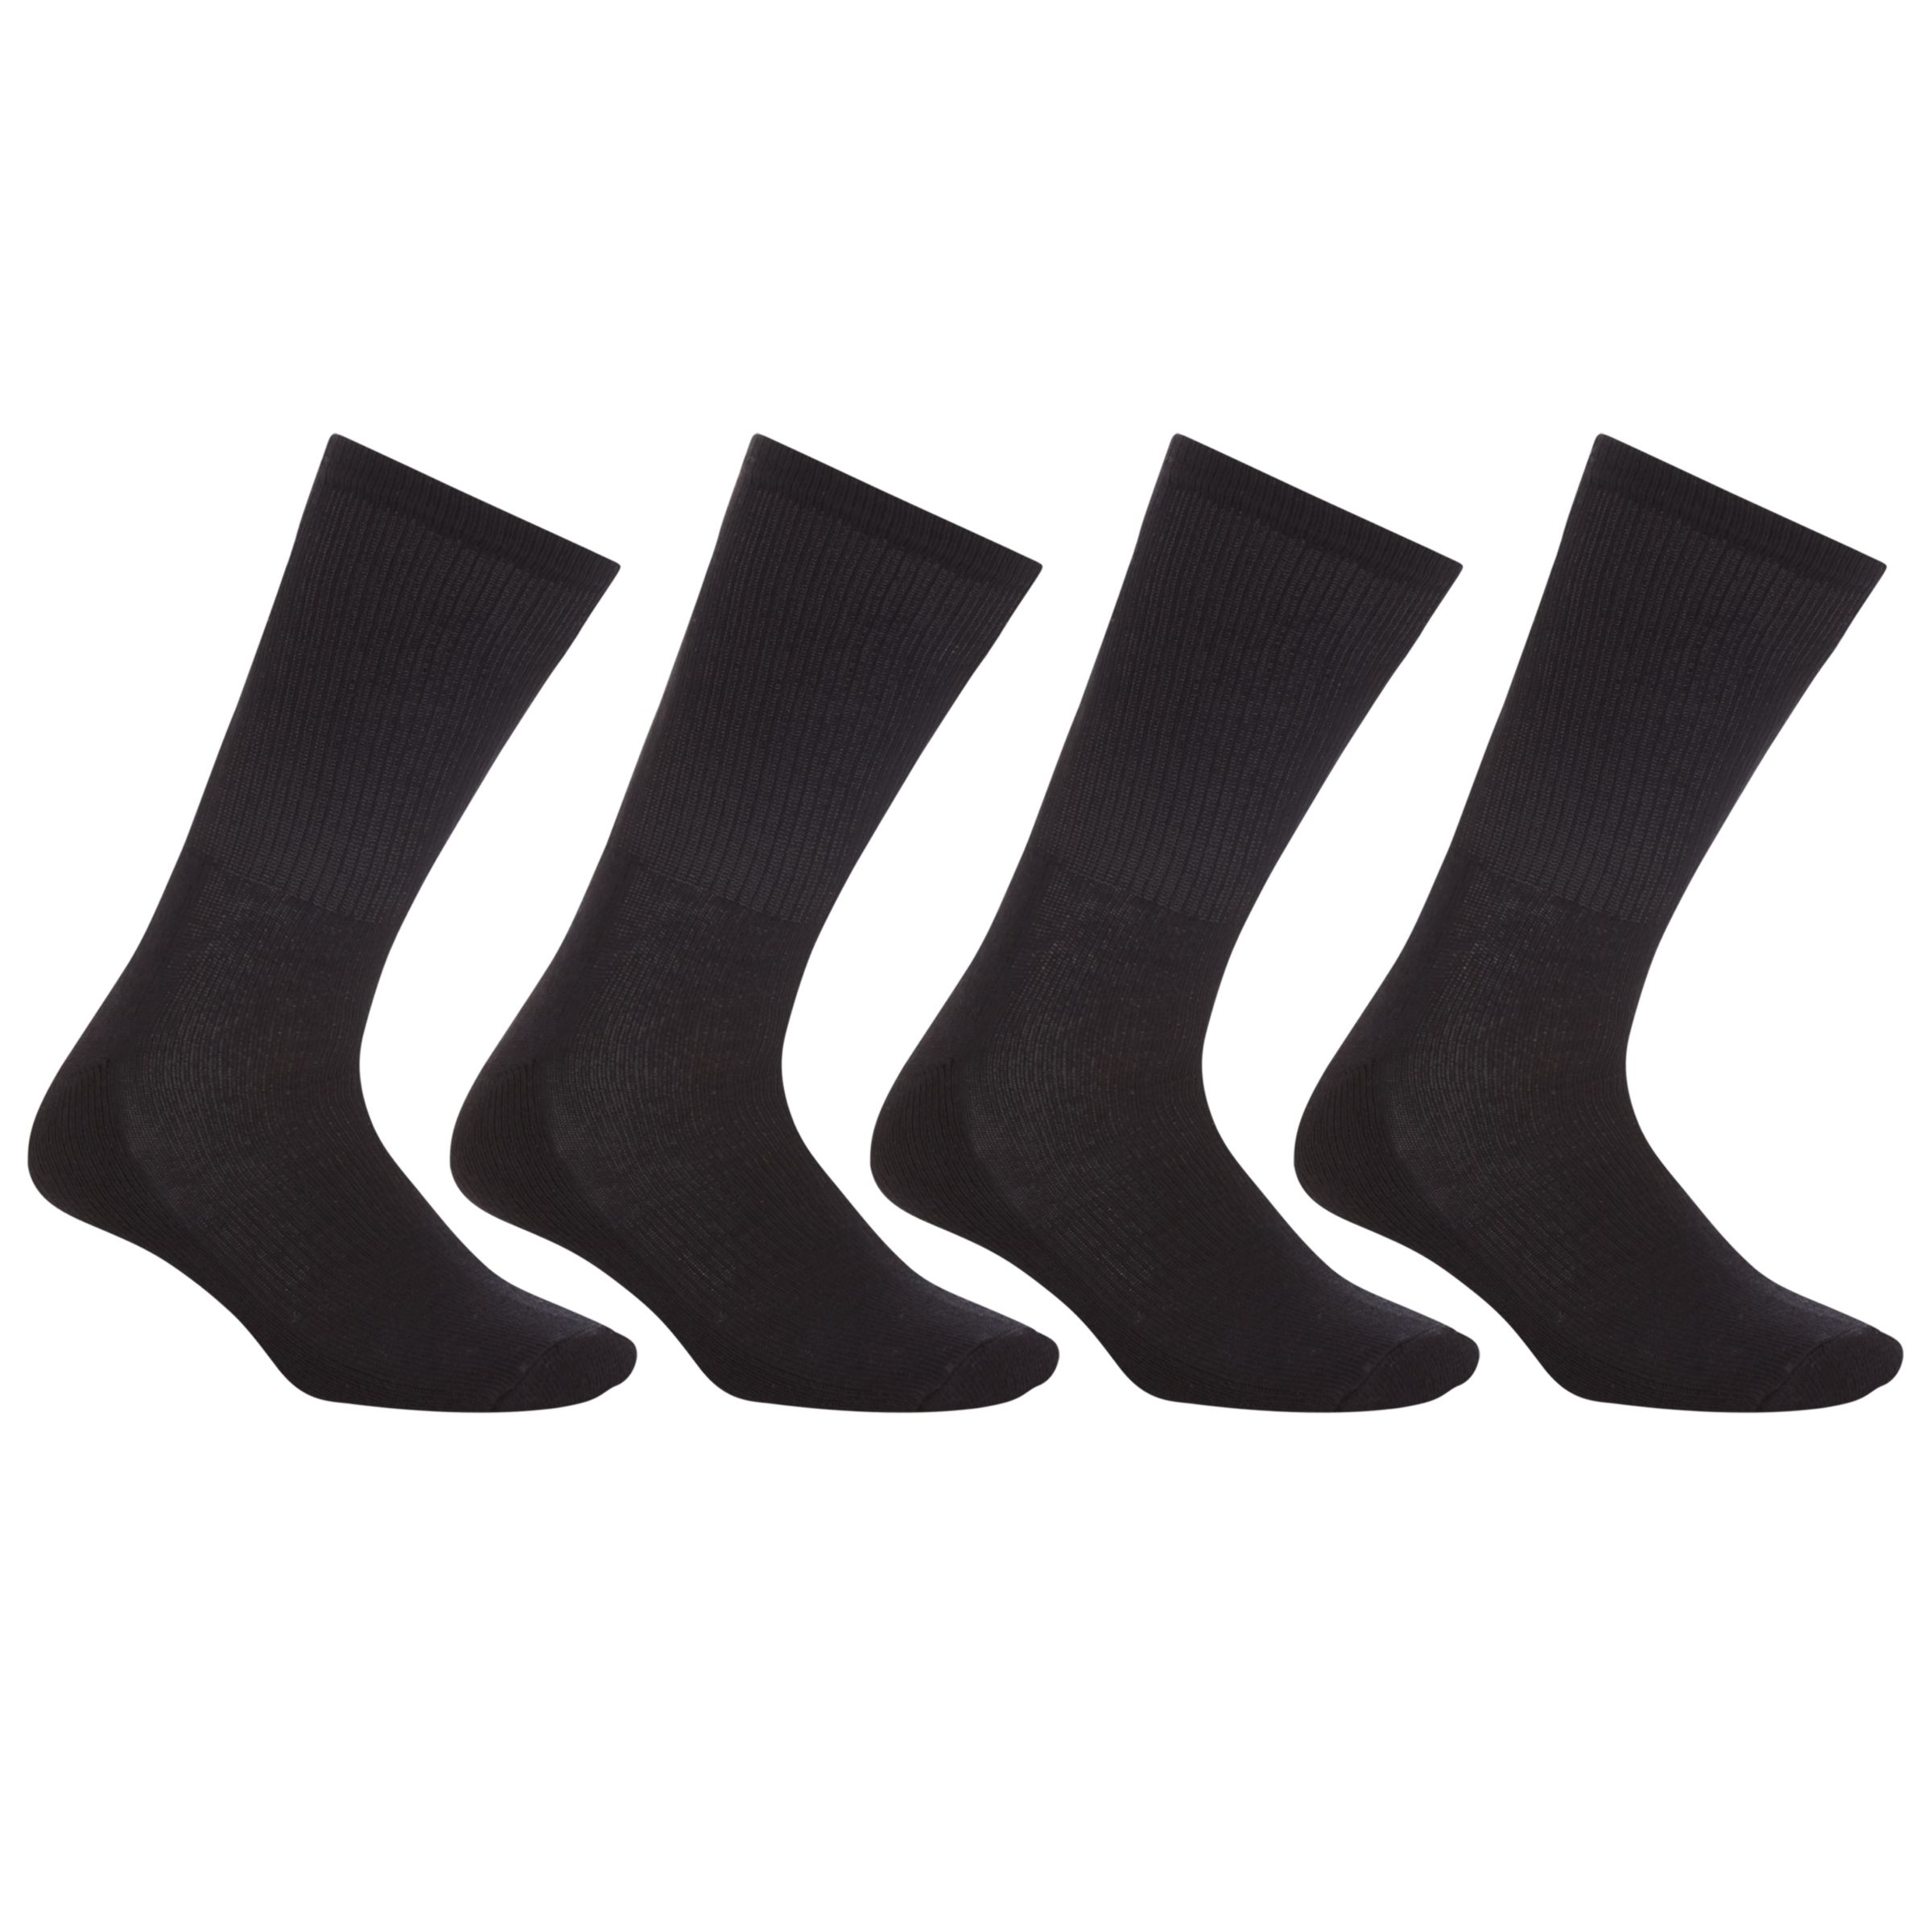 John Lewis & Partners Sport Cushion Sole Socks, Pack of 4 at John Lewis ...